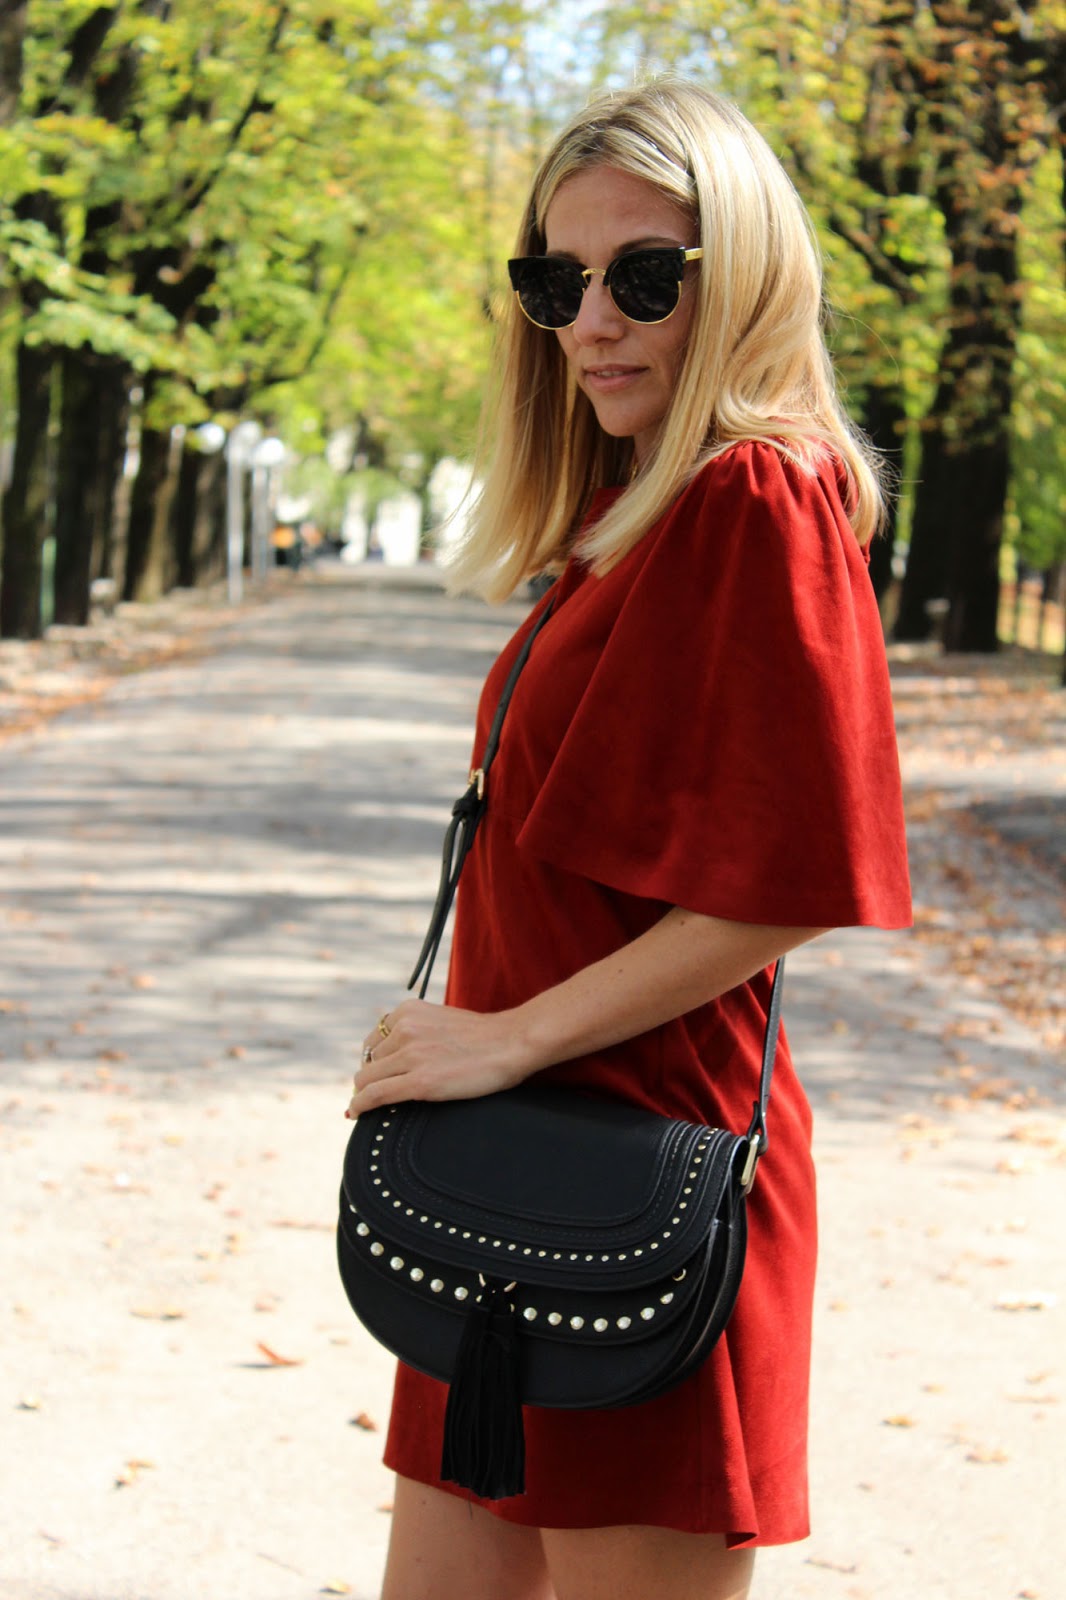 Eniwhere Fashion - Zara red dress